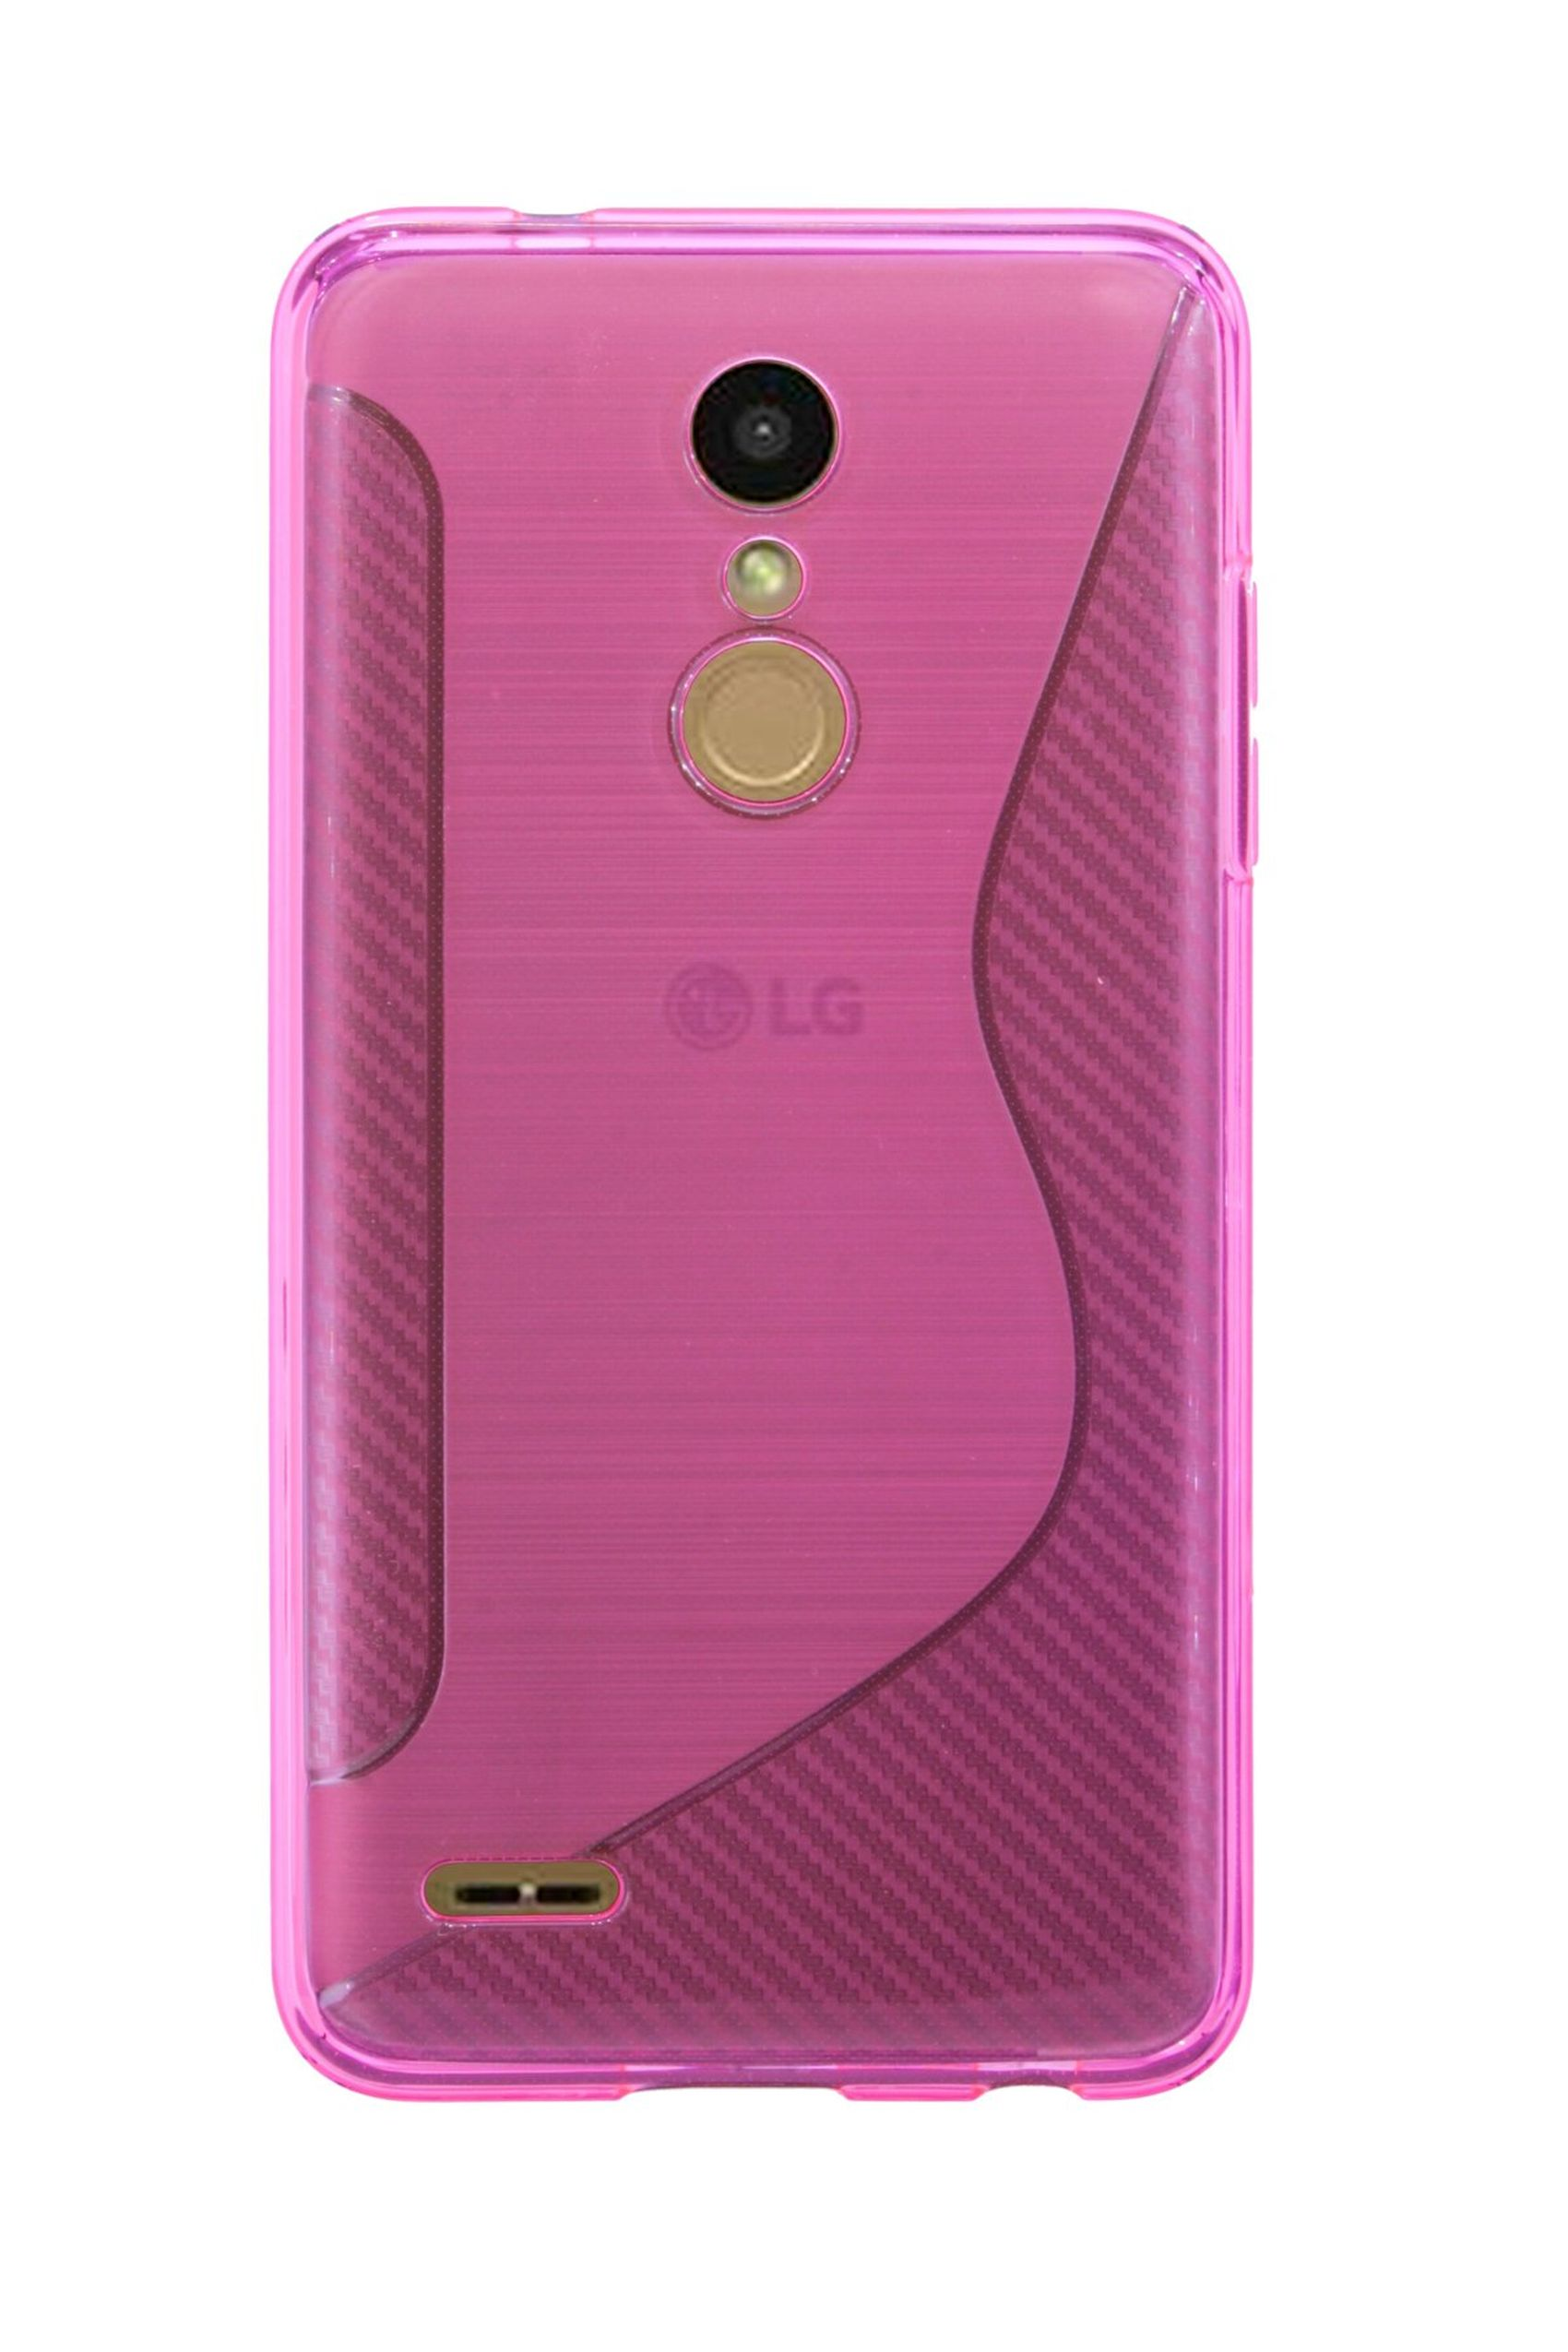 COFI LG Silikonschale Bumper Pink, Cover Zubehör Bumper, SchutzHülle in Case LG, K11, TPU Silikon Rosa K11//S-Line Hülle